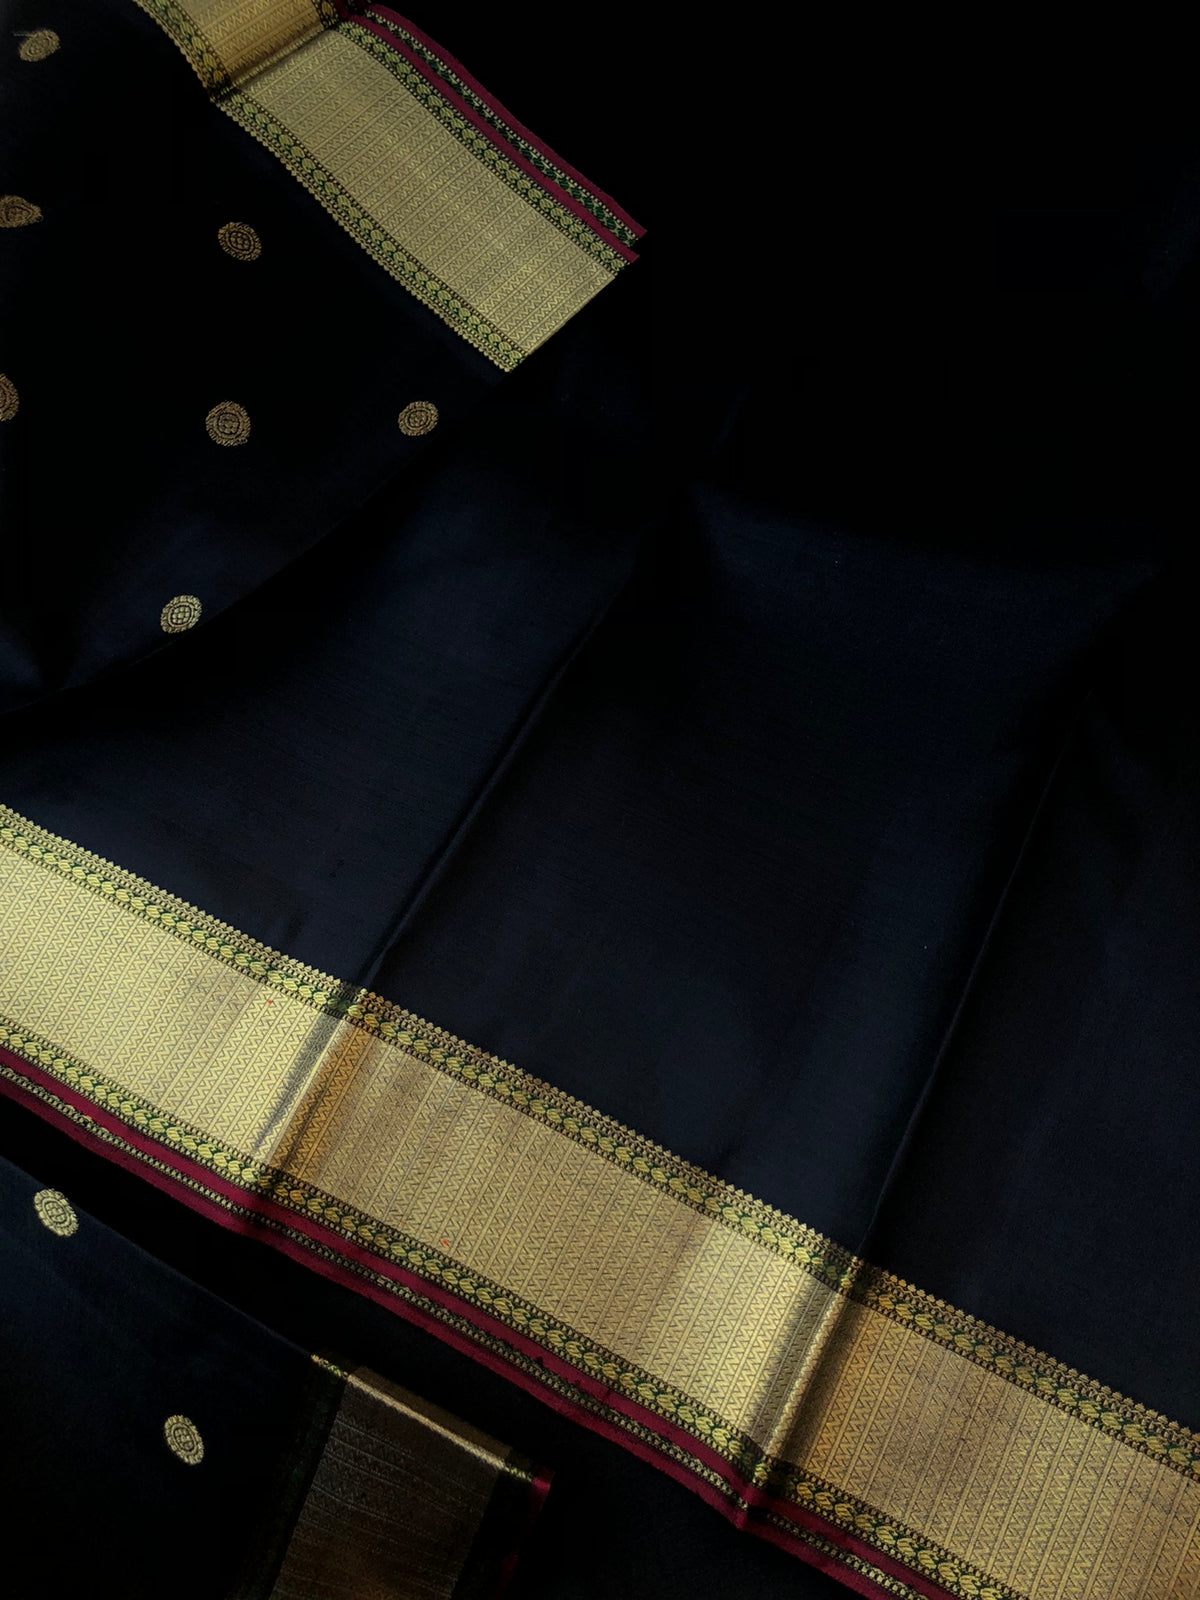 Swarnam - Black and Gold Kanchivarams - stunning black and gold with wine maroon sleeve edge is super stunning